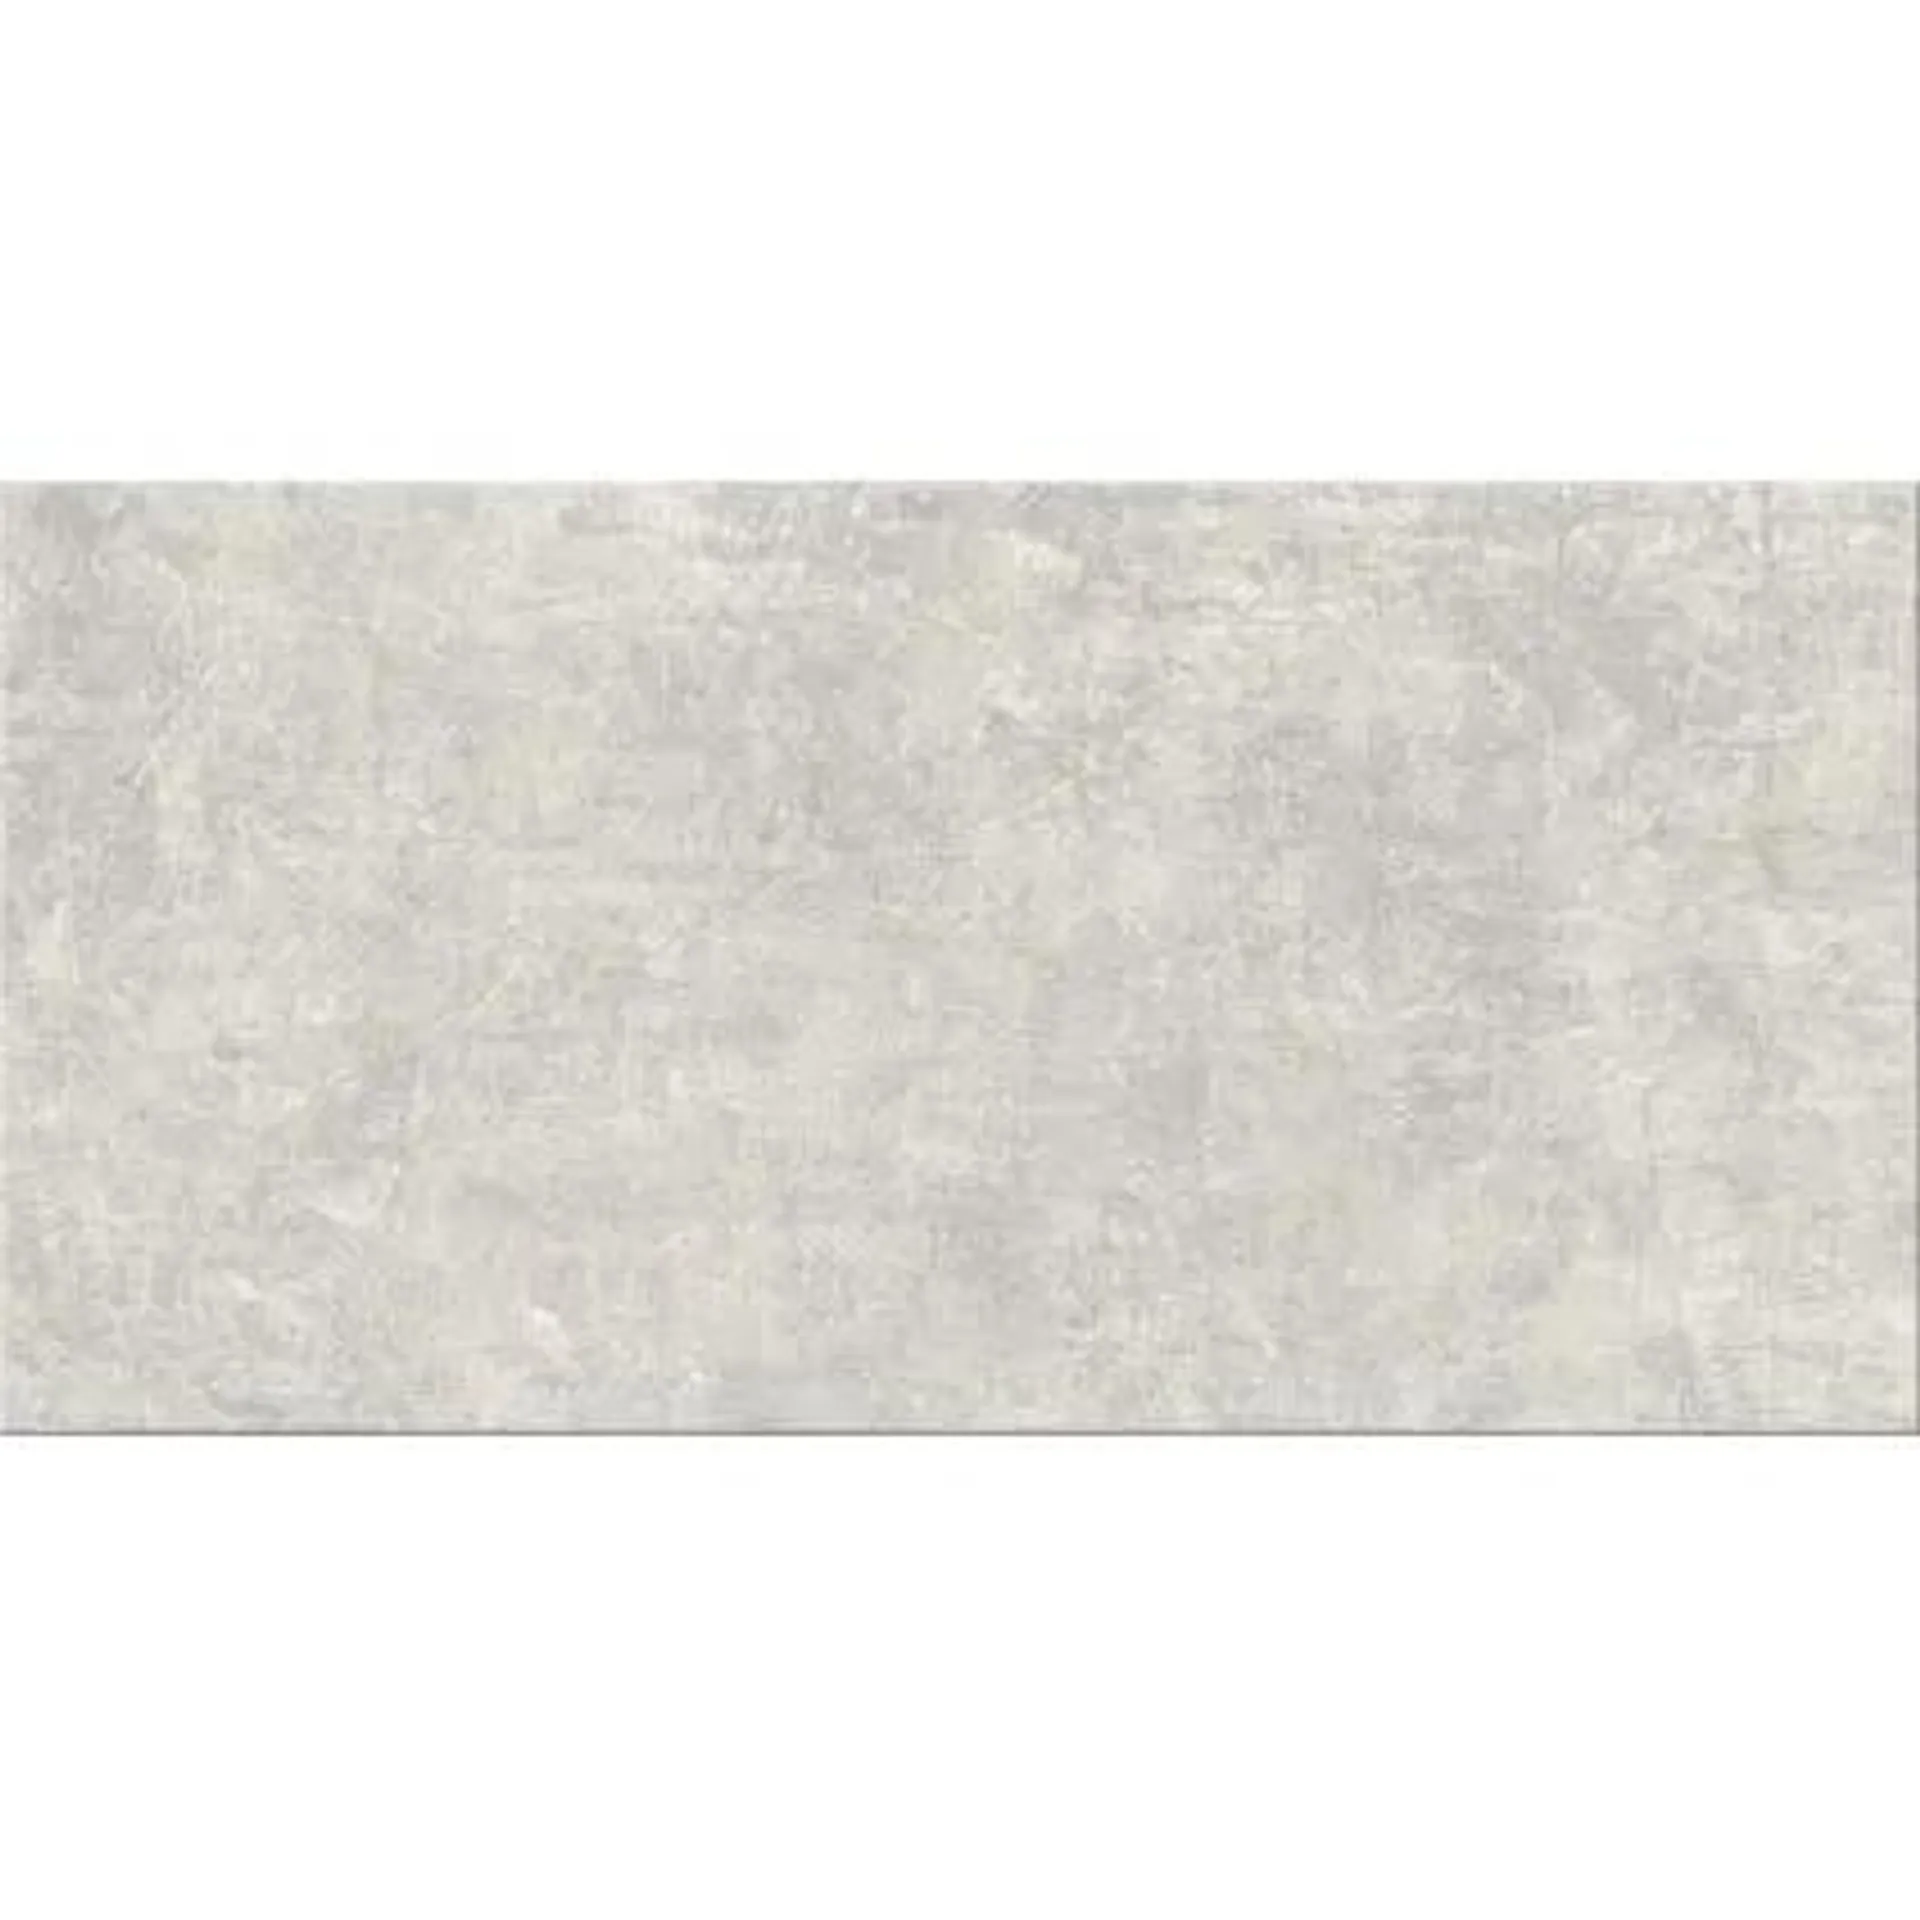 Carrelage sol et mur Serenity gris 30x60cm